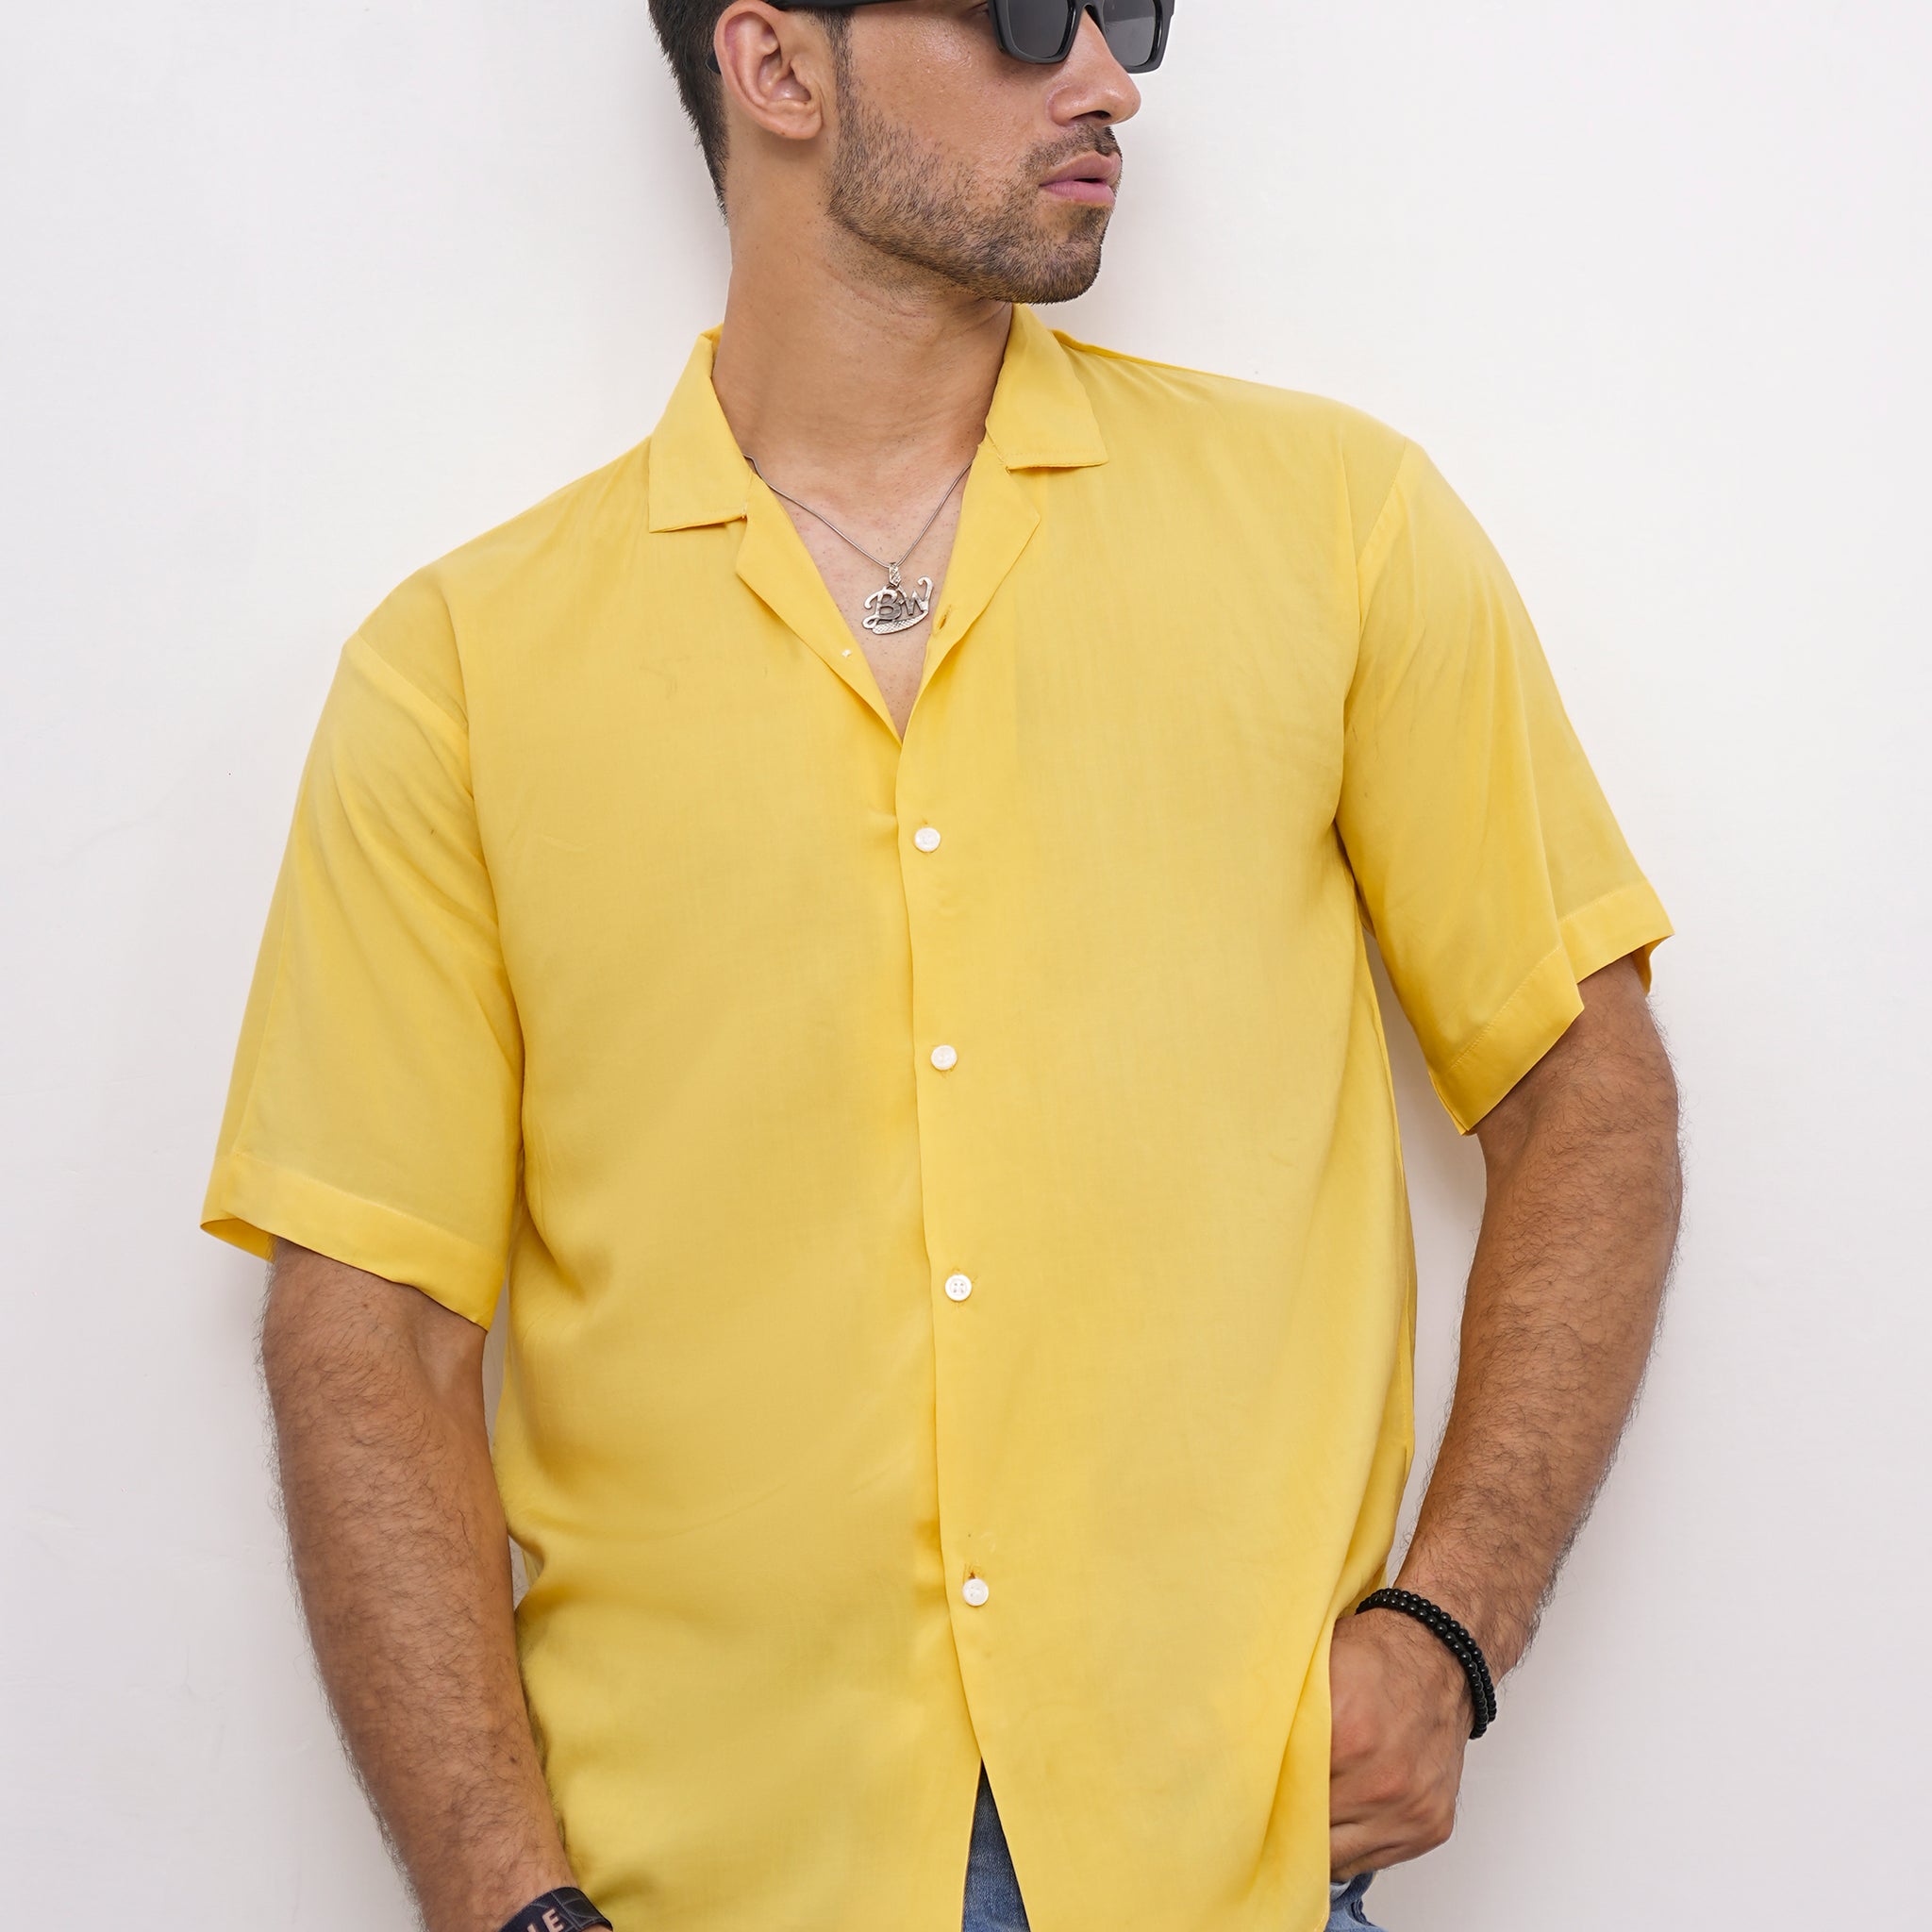 Basic Yellow Shirt